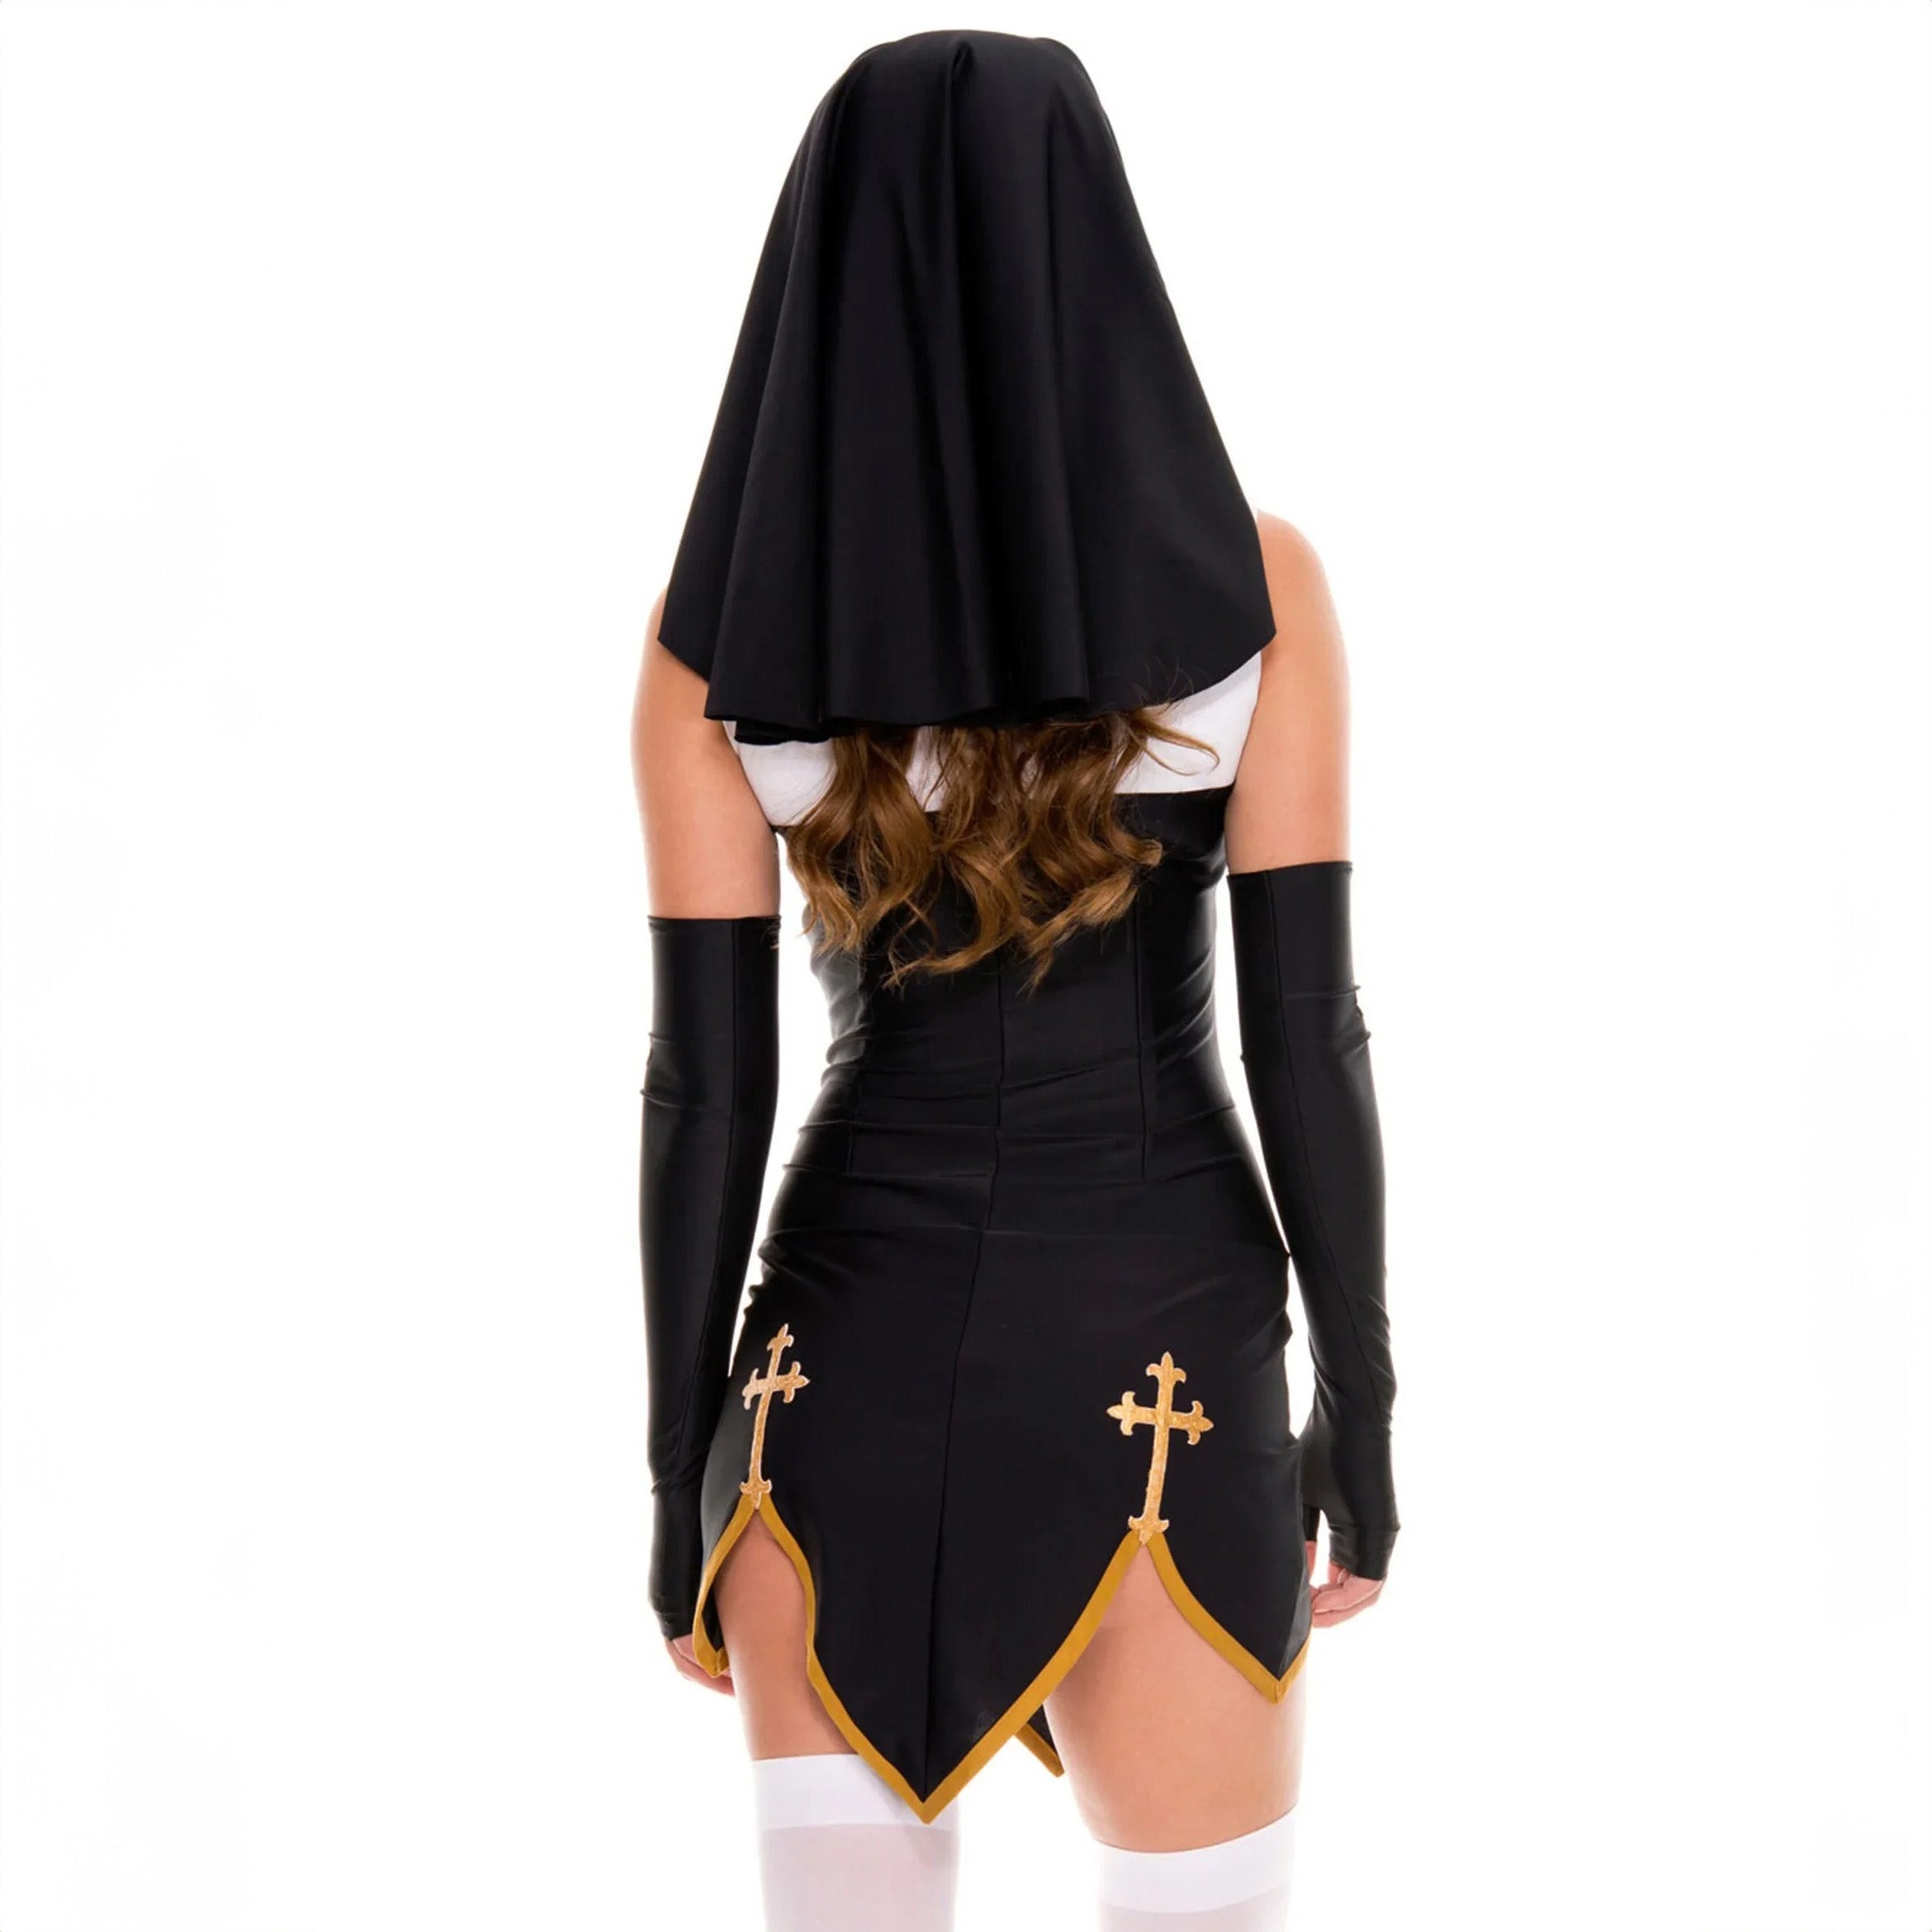 Women's Sexy Nun Cosplay Costume